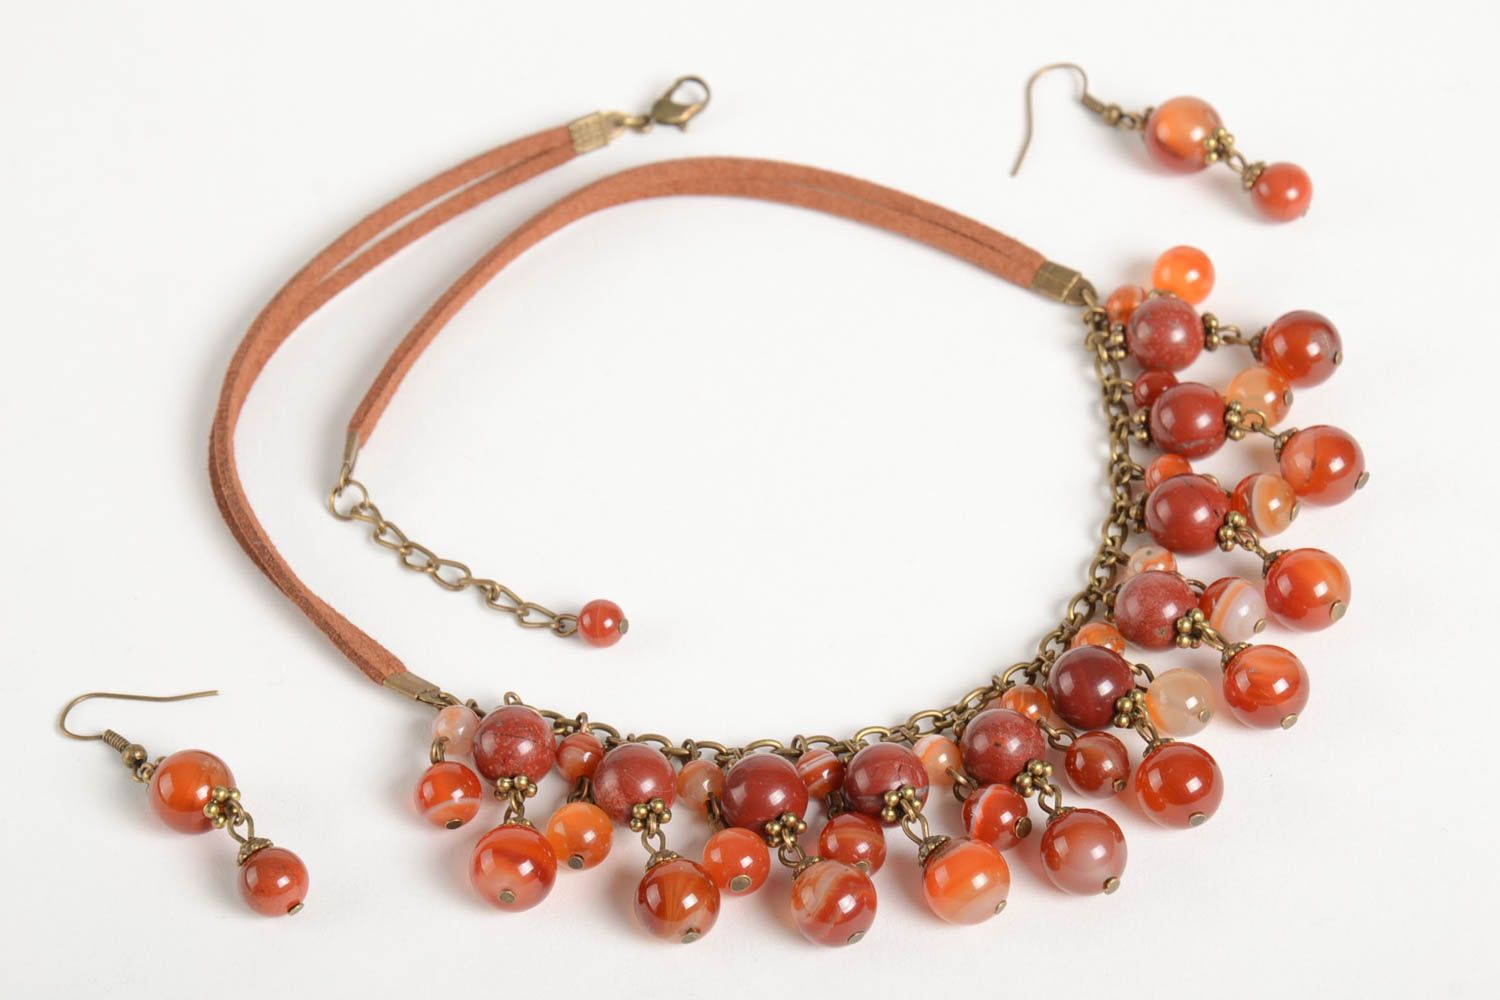 Handmade natural stone accessories elegant jewelry set designer gift for her photo 5